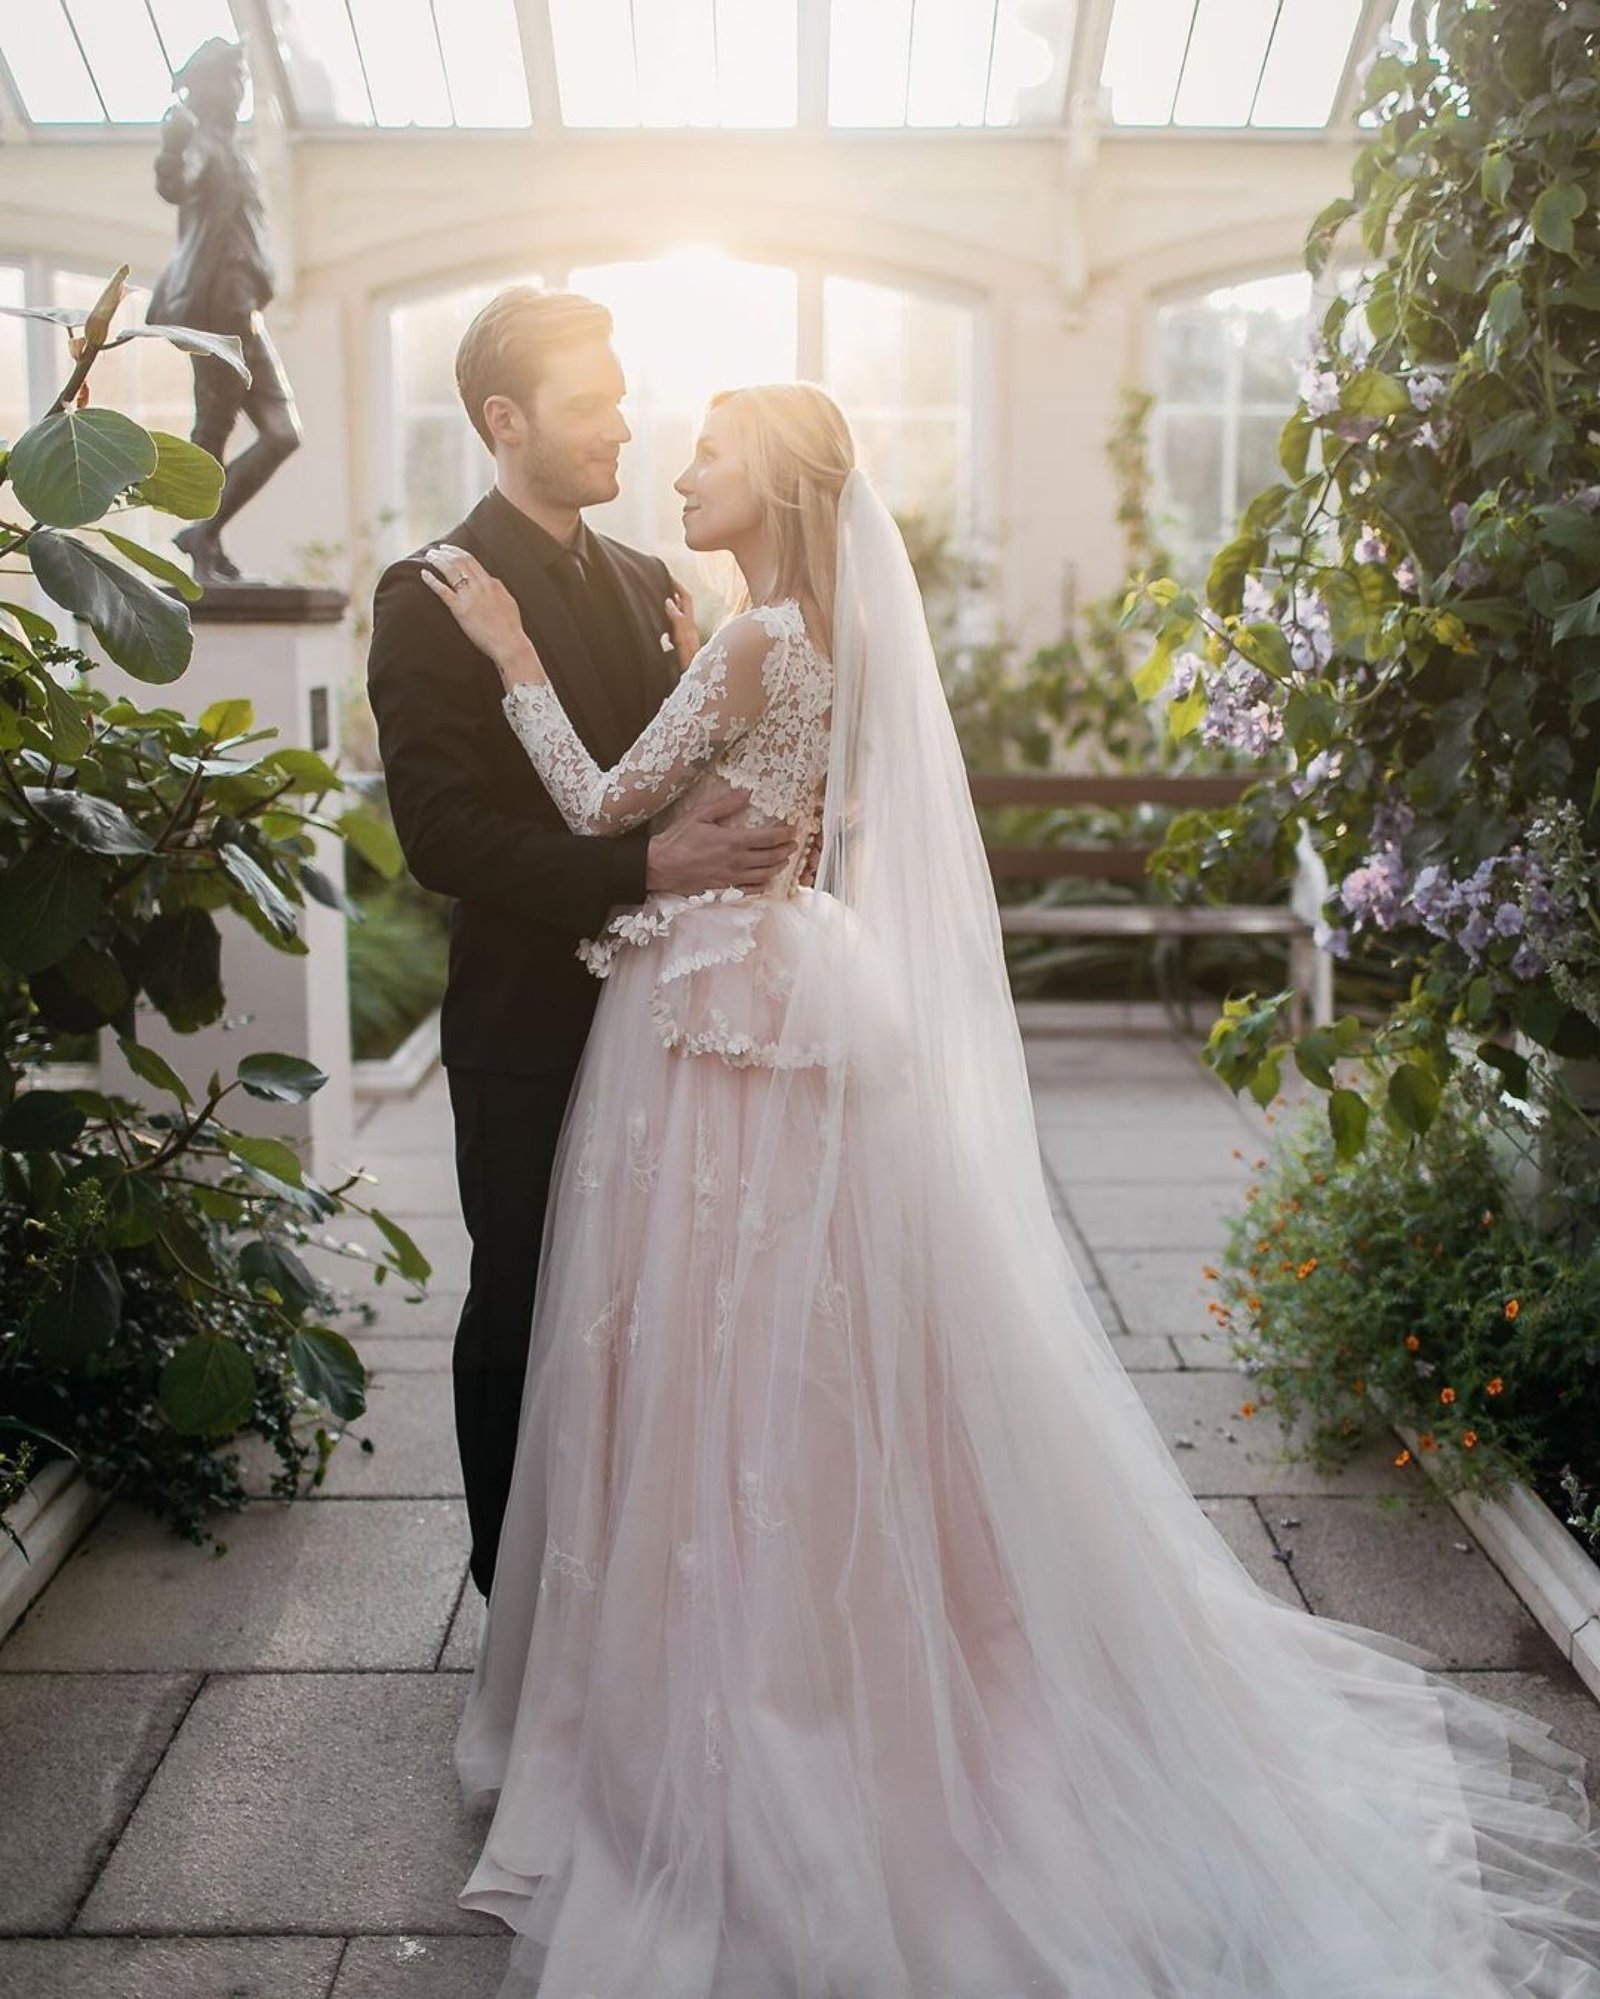 Felix-and-Marzia-wedding-dress-by-JoanneFlemingDesign-JessicaKobeissiPhoto (4)